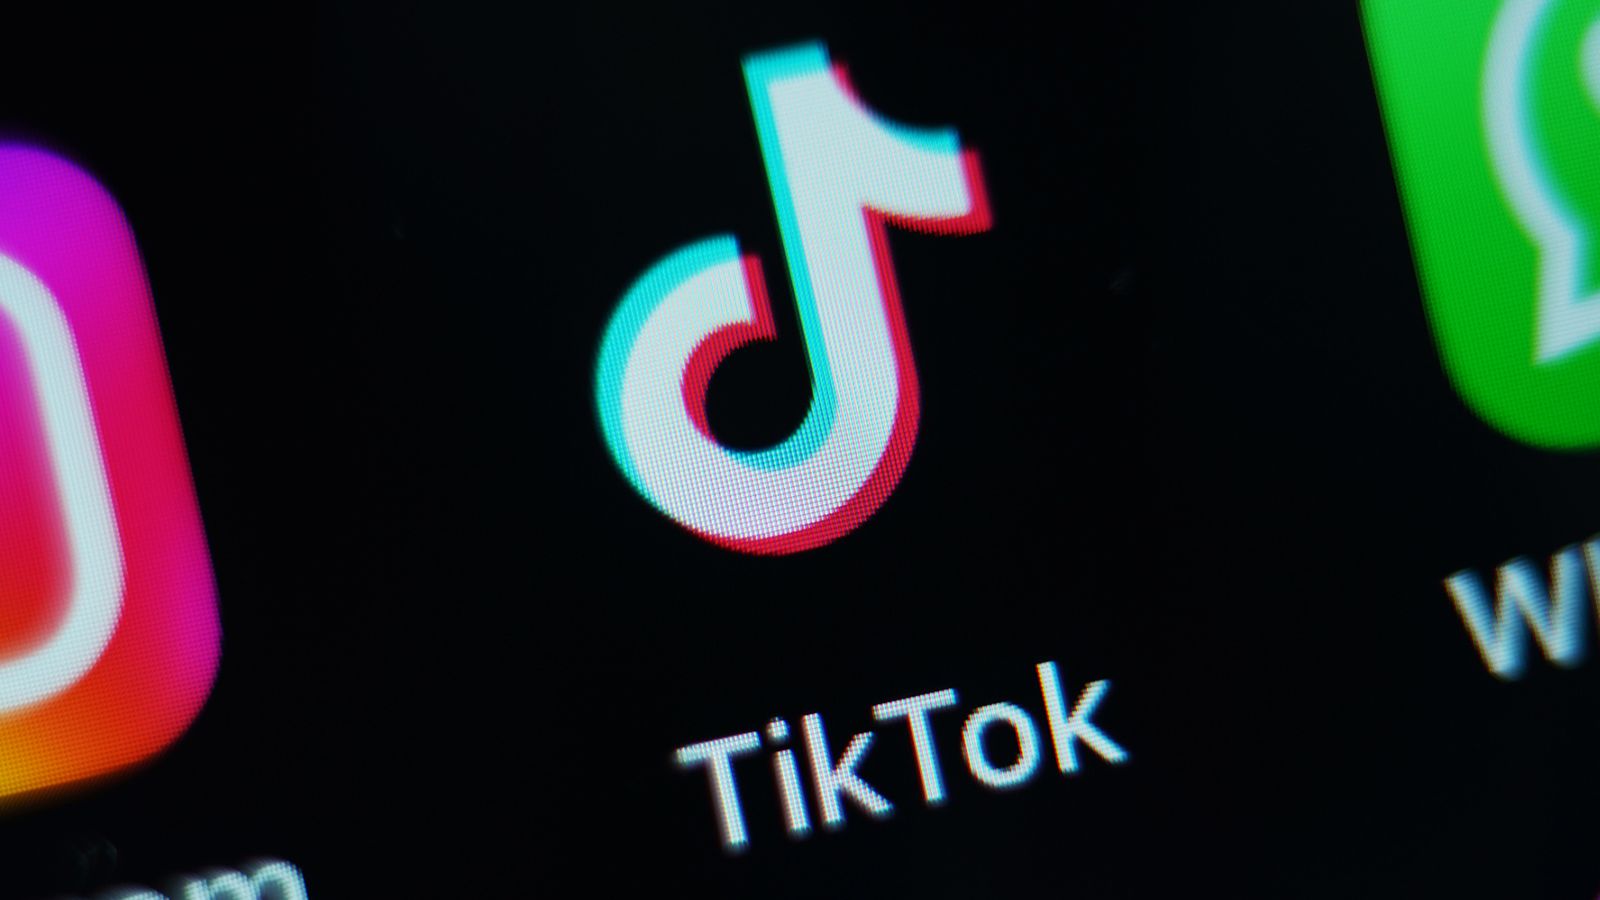 taylor swift music 'back on tiktok' despite app's public spat with singer's record label